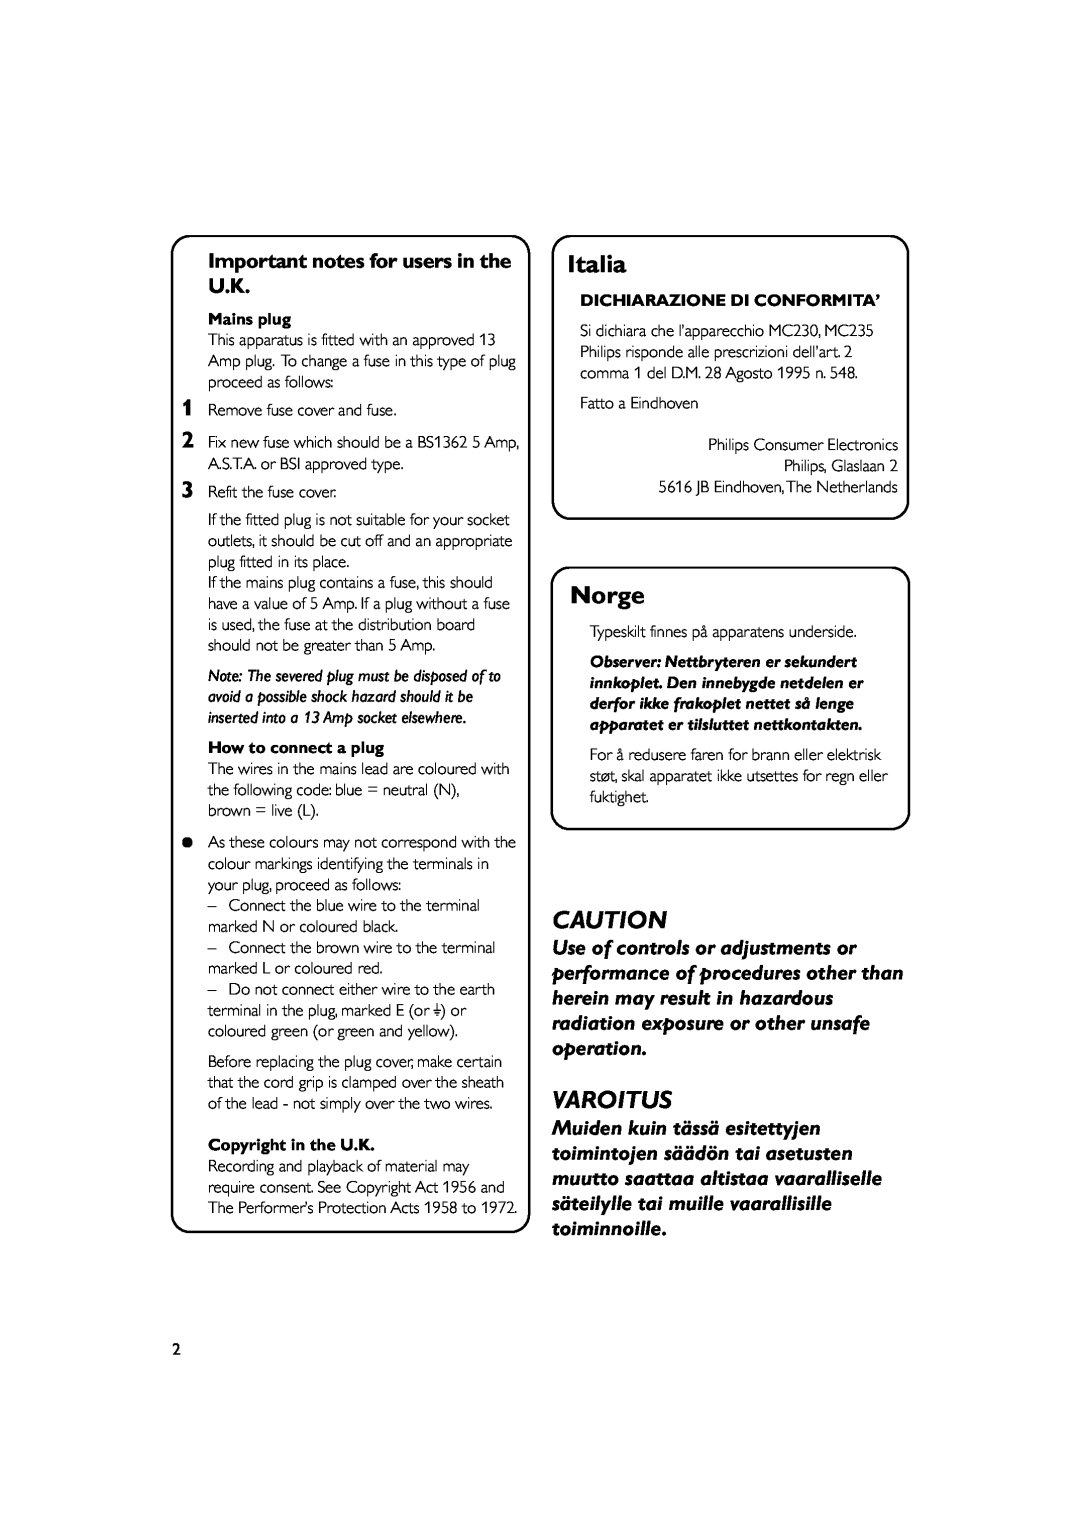 Philips MC235, MC230 user manual Important notes for users in the U.K, Italia, Norge, Varoitus 